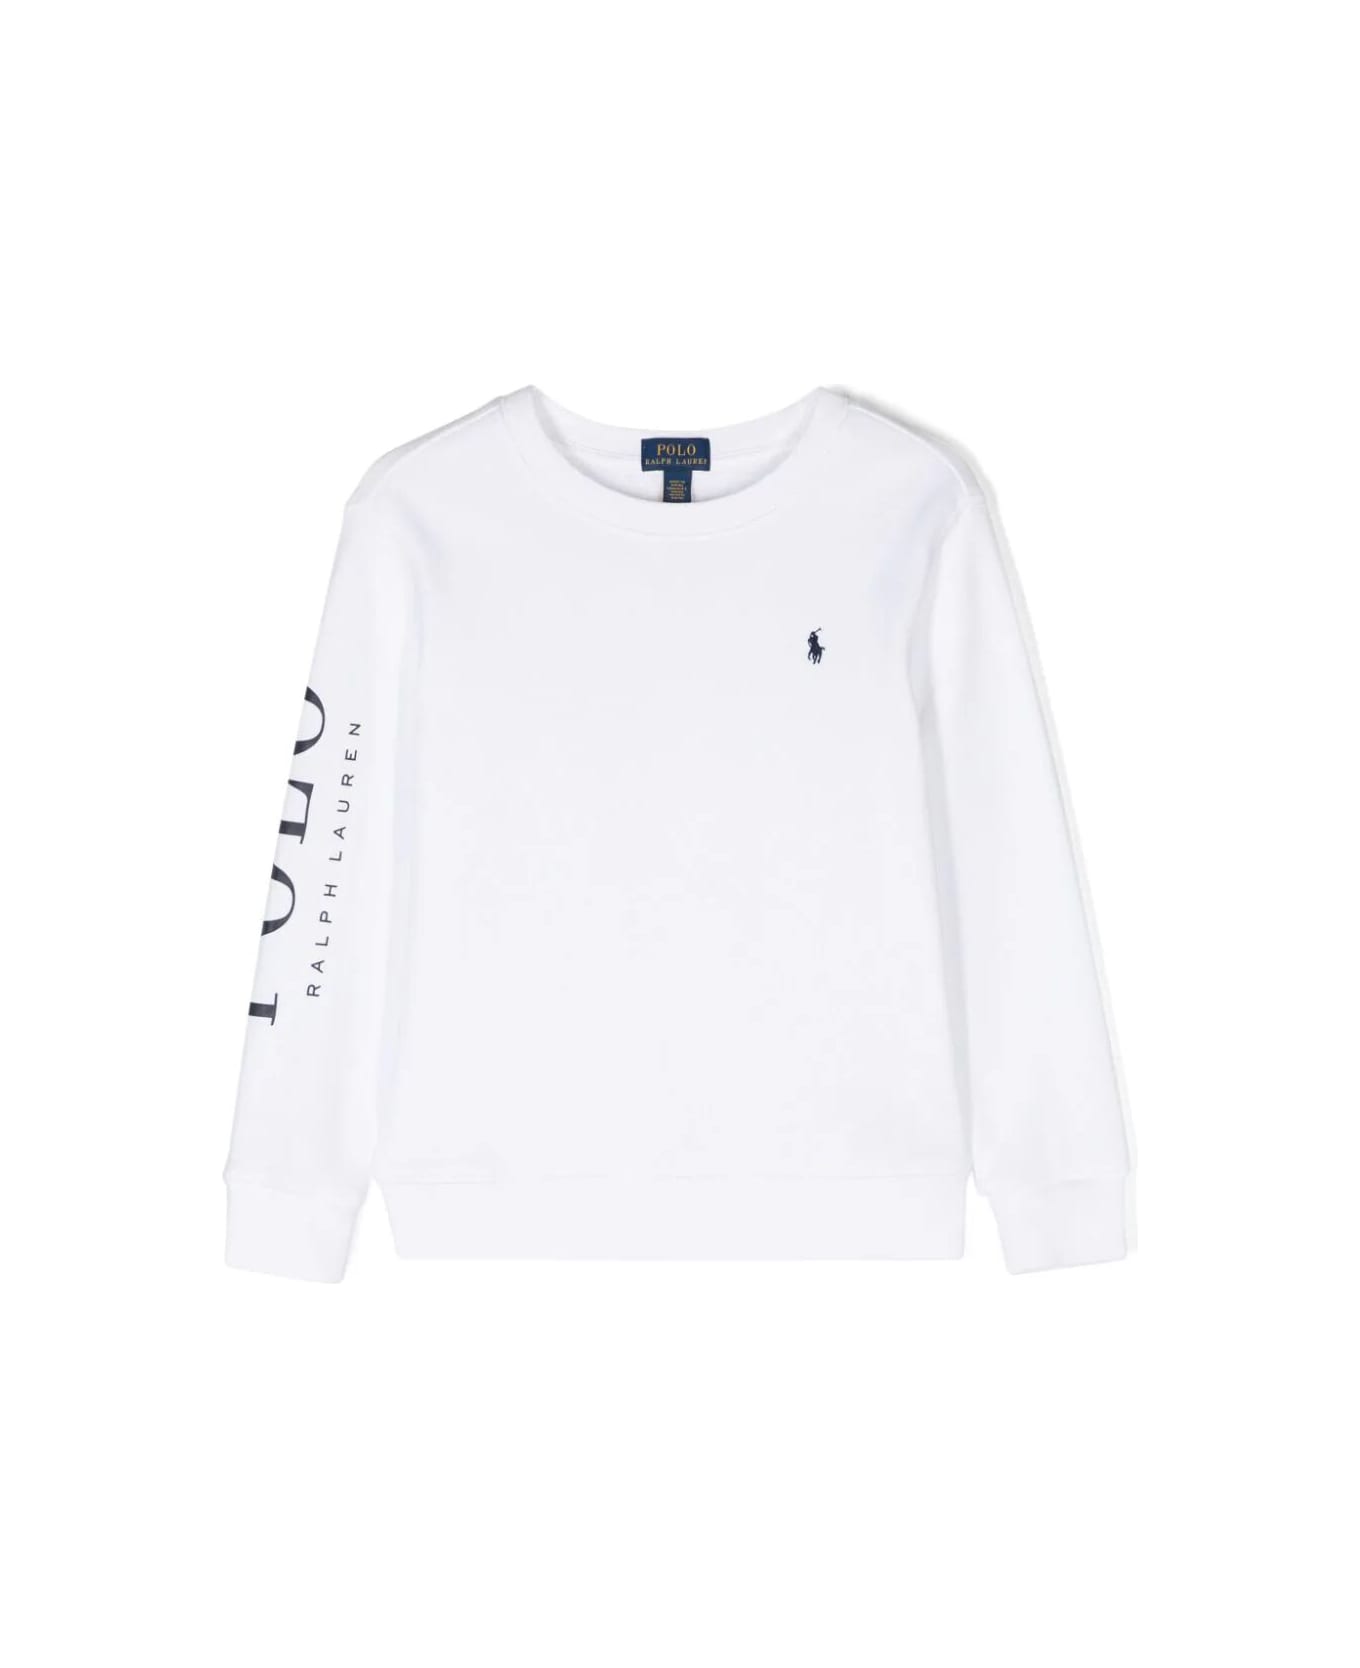 Polo Ralph Lauren Ls Cn Knit Shirts Sweatshirt - White